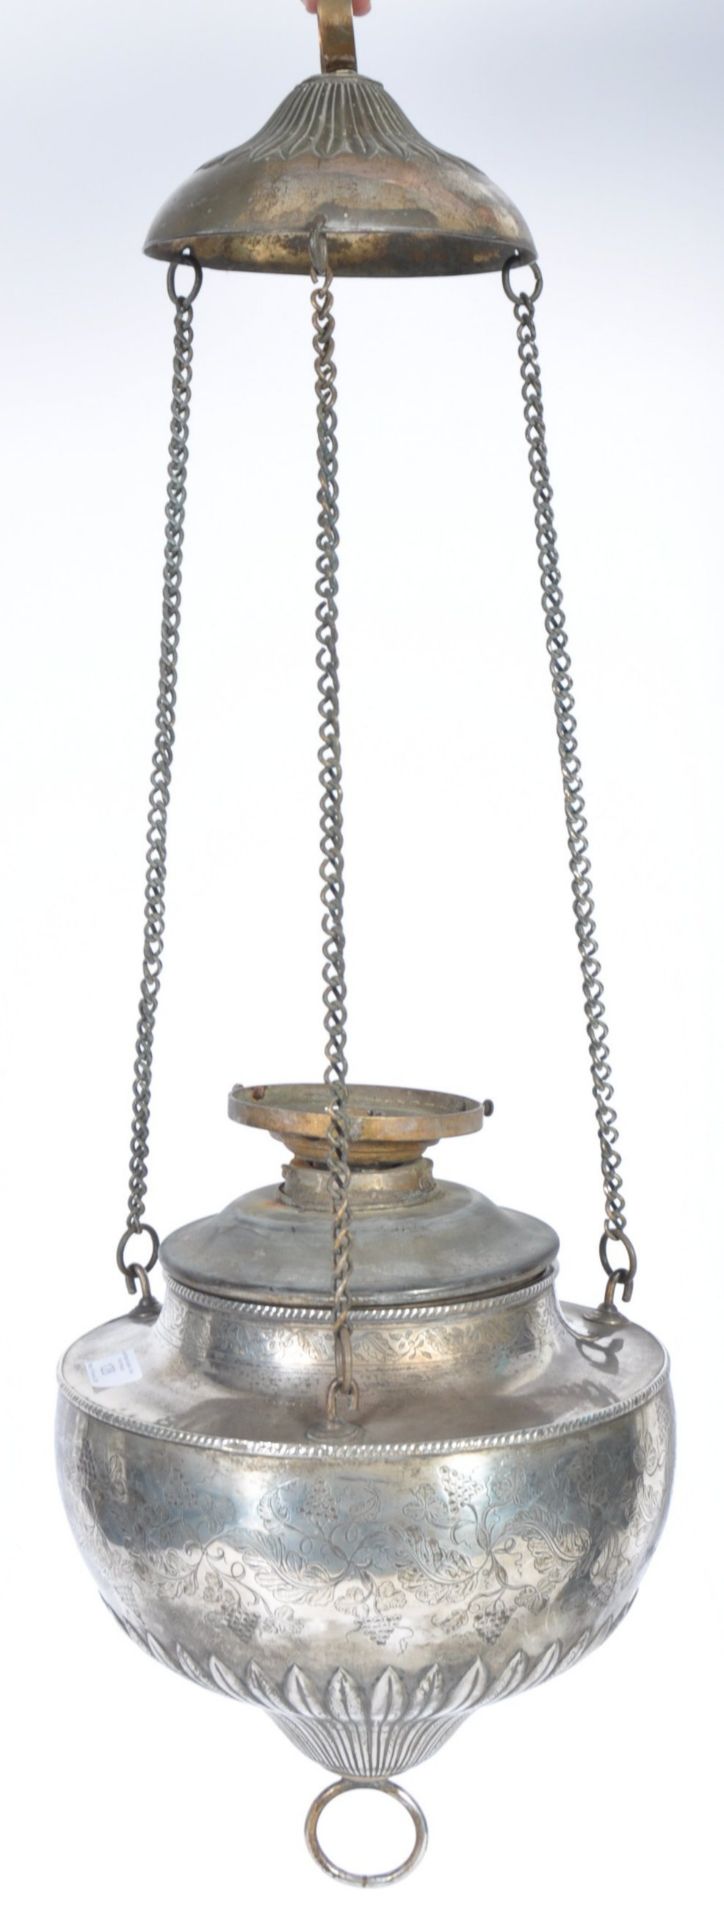 19TH CENTURY ECCLESIASTICAL SILVER PLATES VIGIL OIL LAMP.